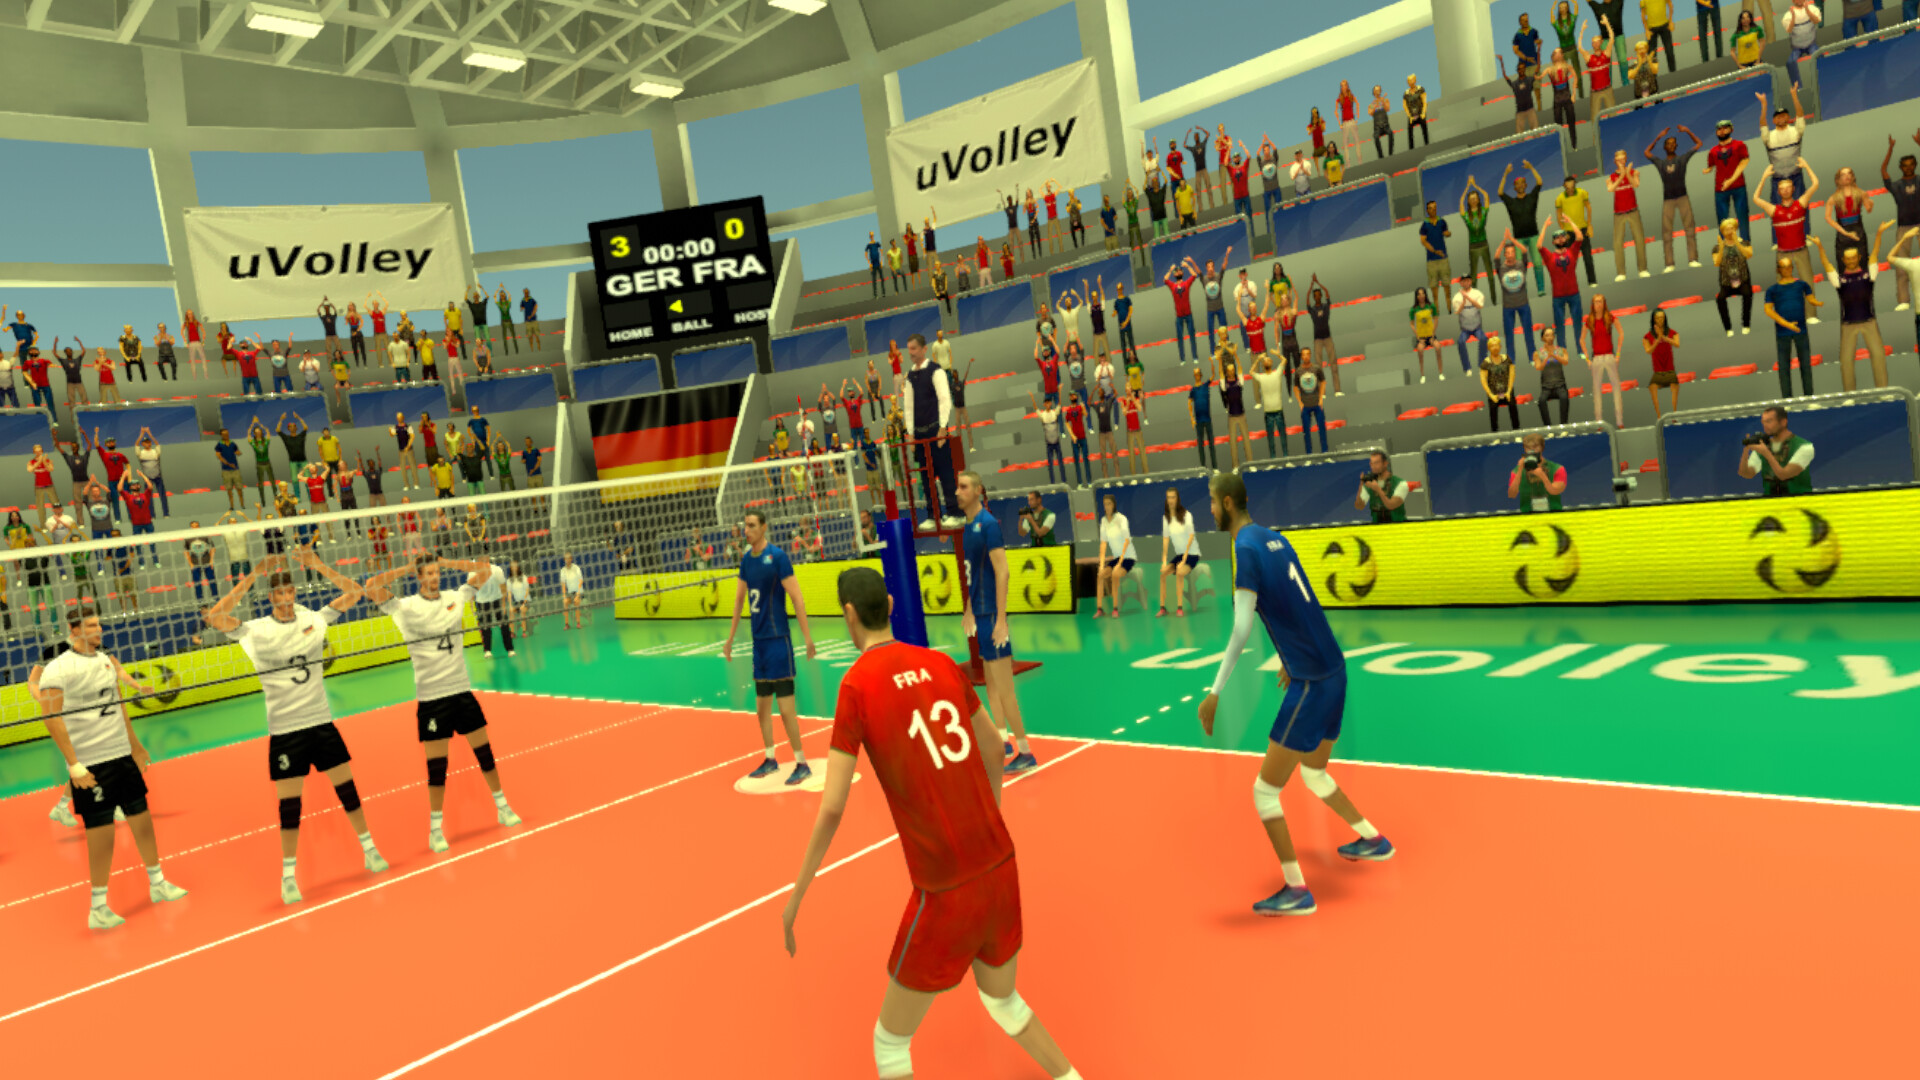 Online Volleyball Games